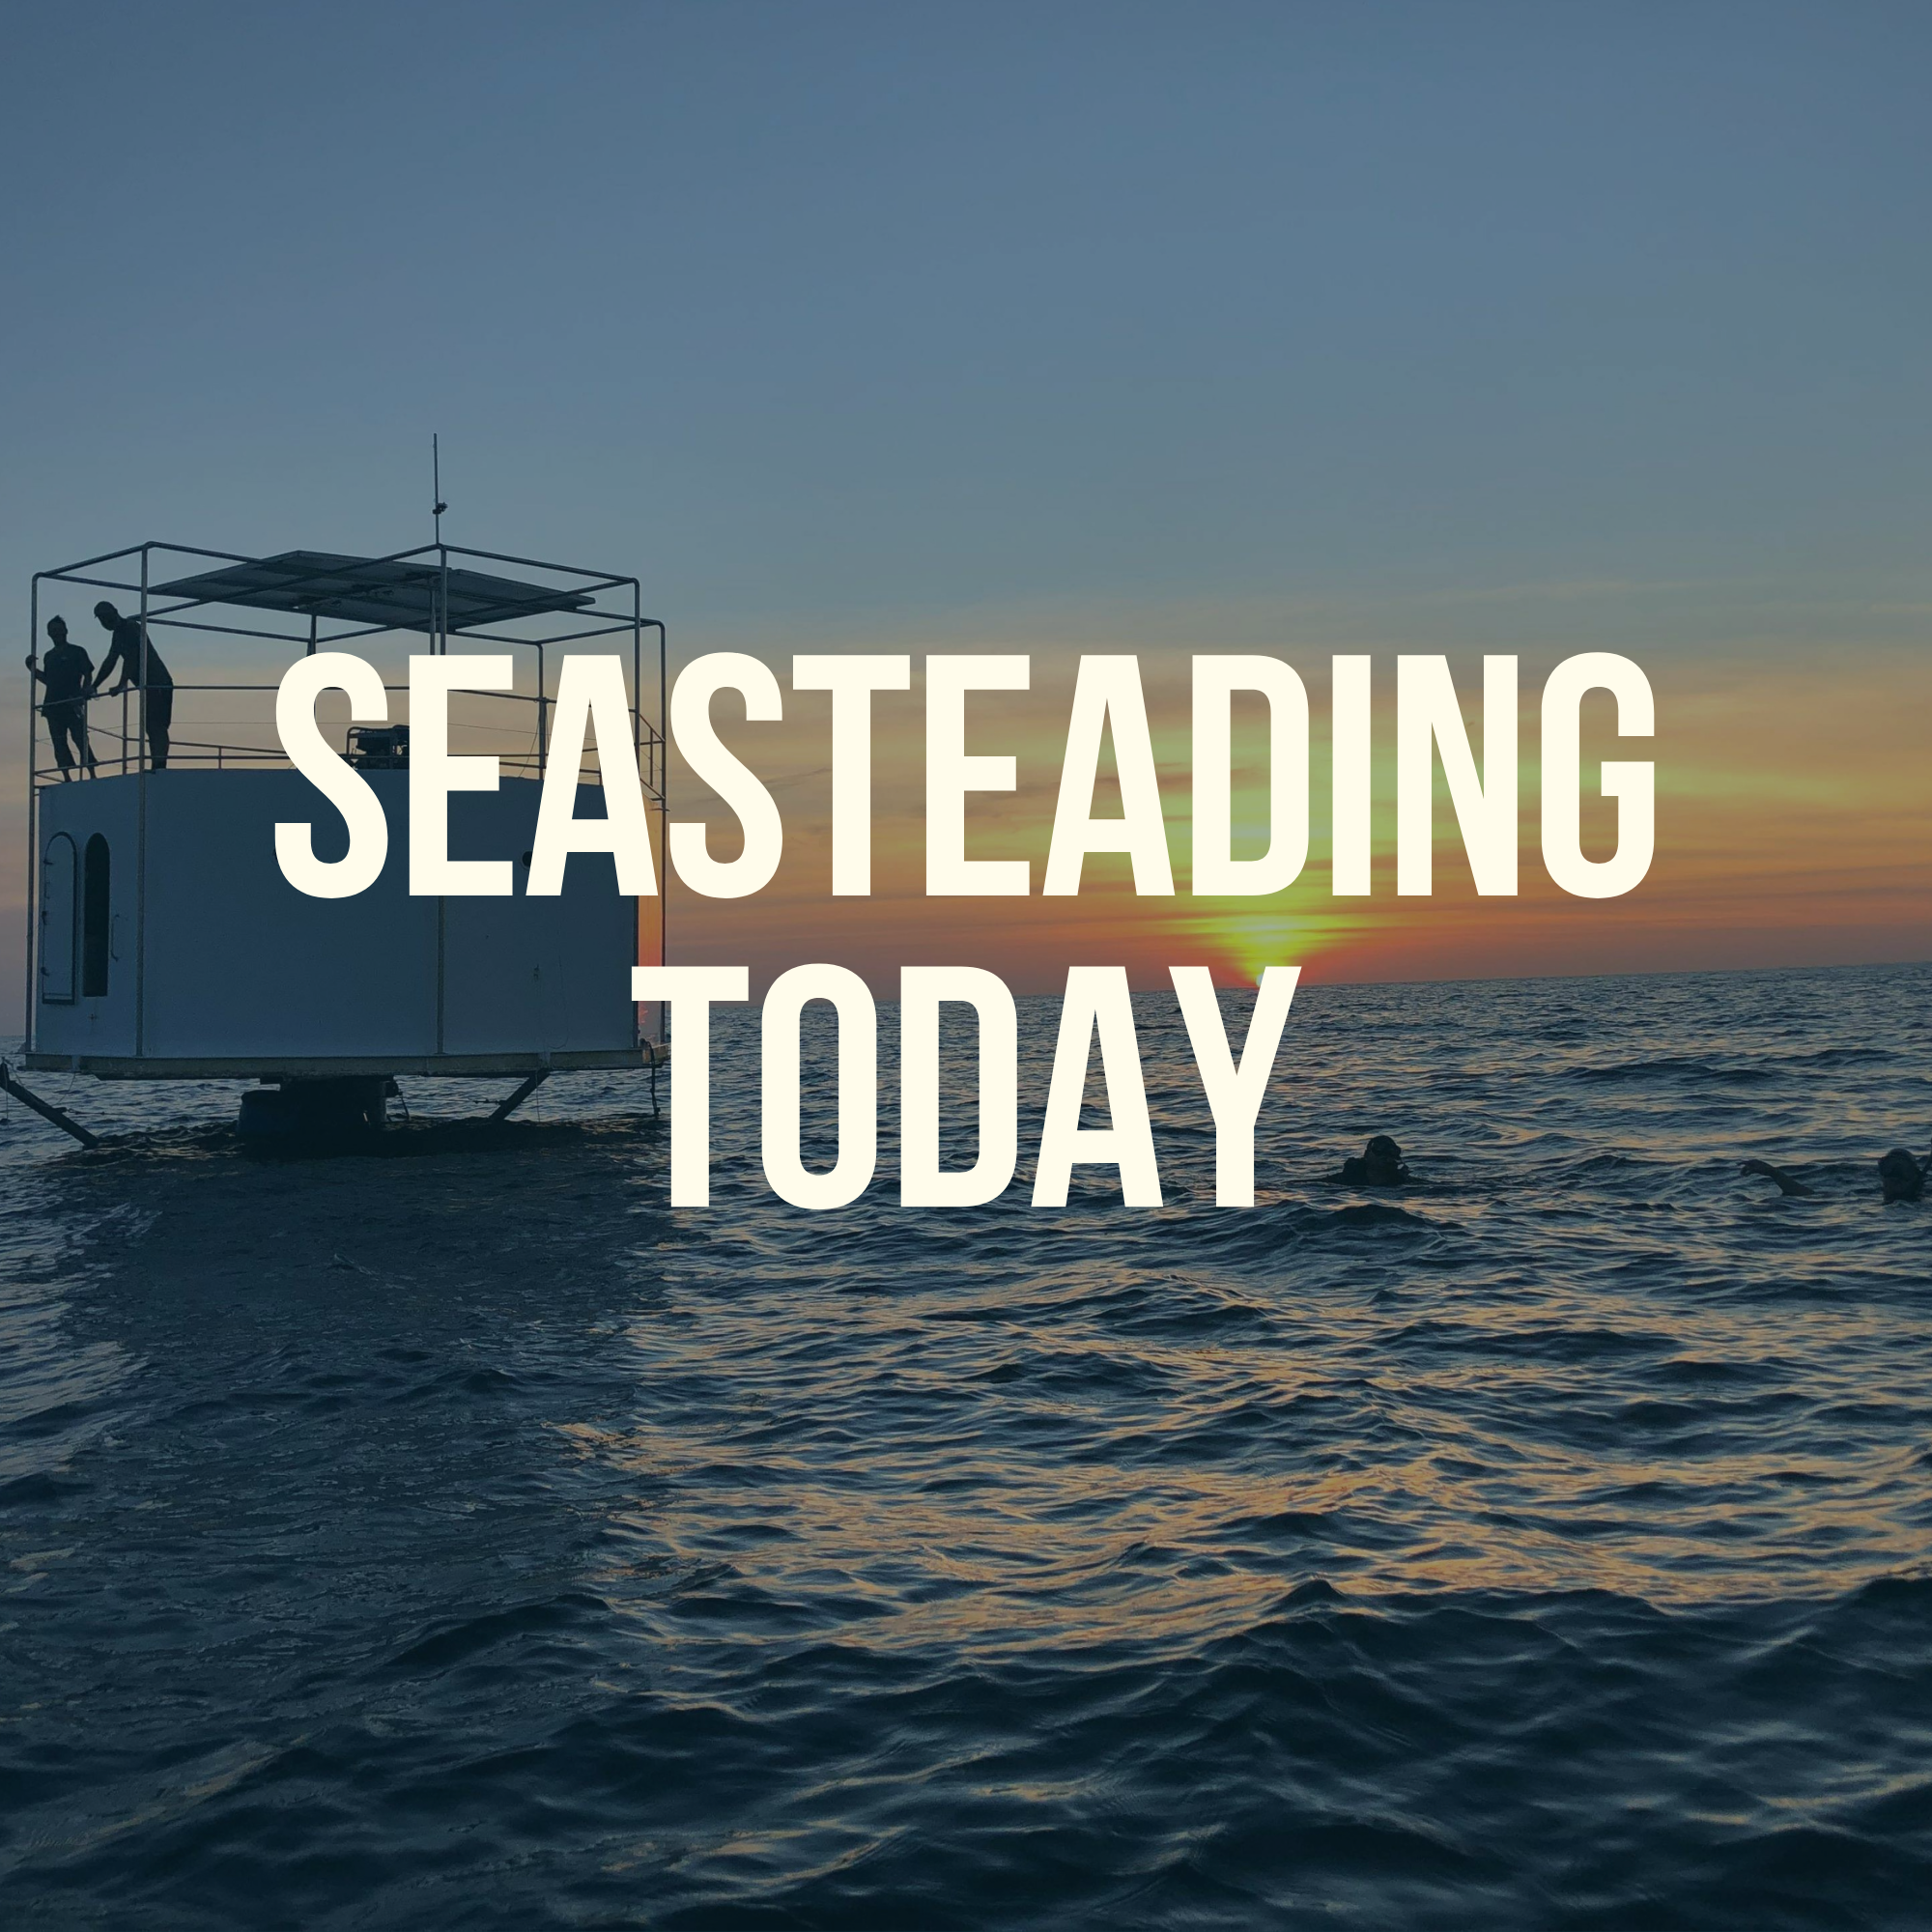 Seasteading Today